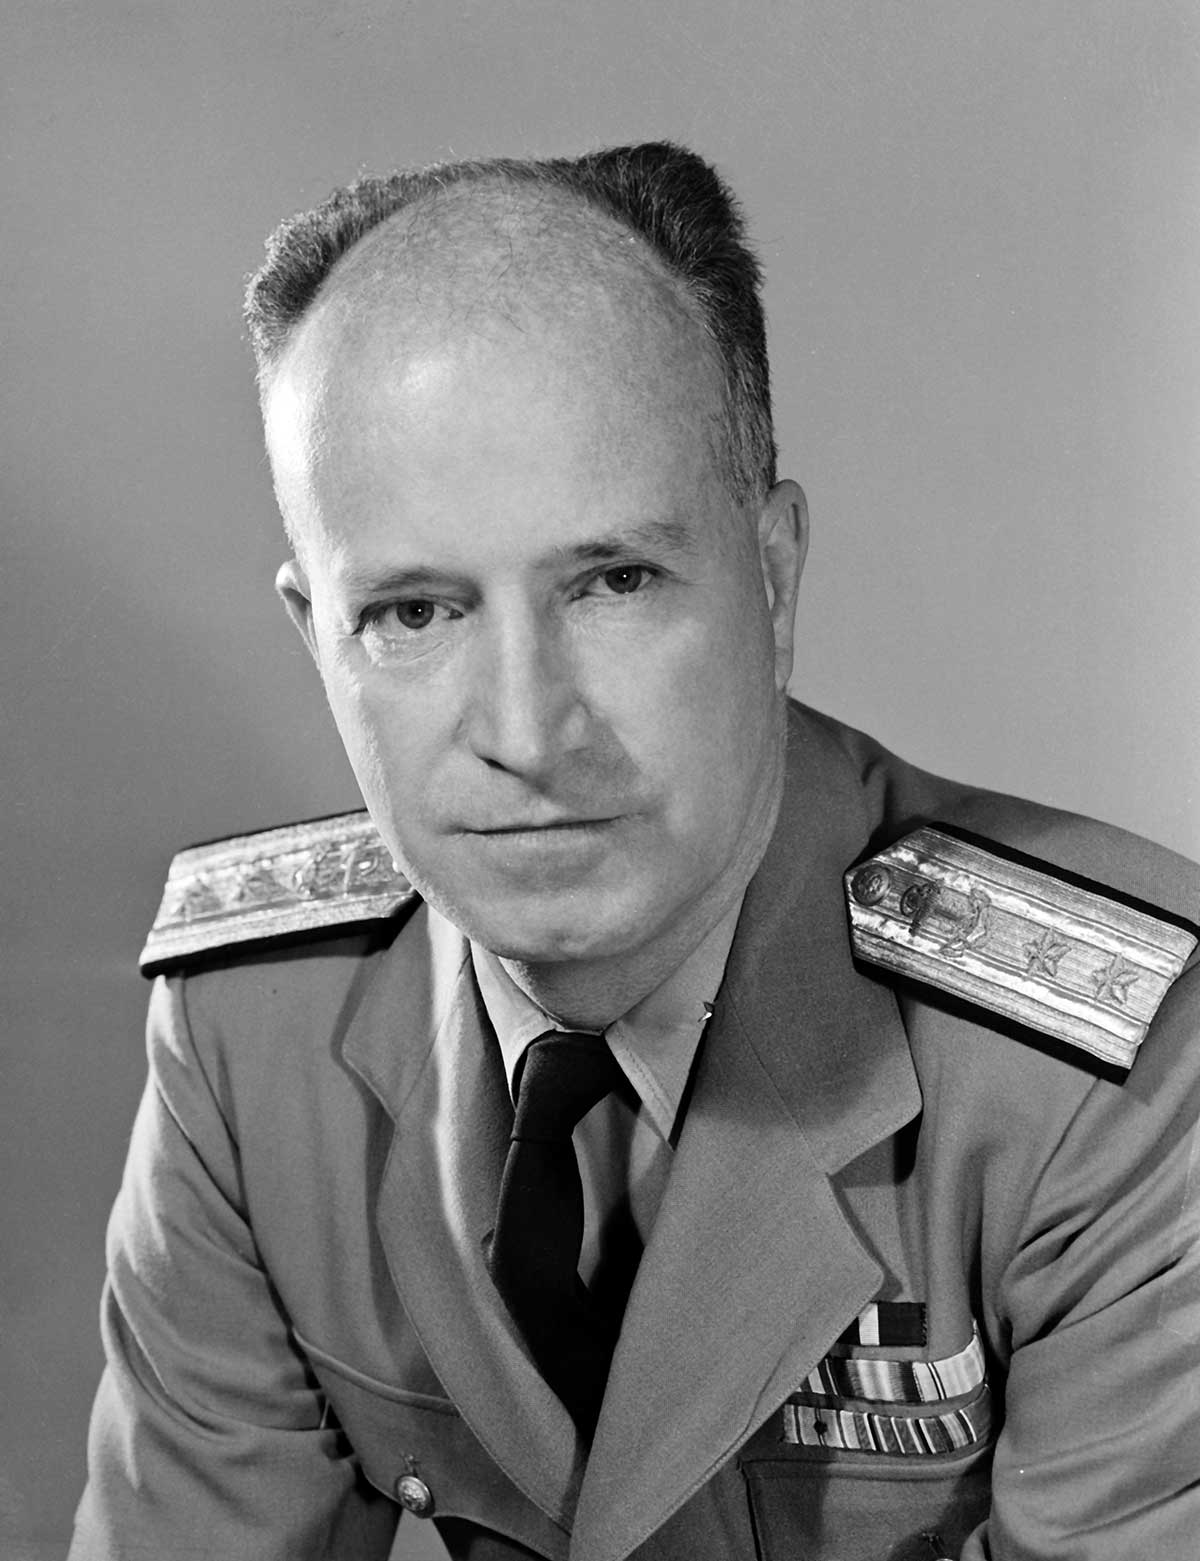 William "Deke" Parsons, Rear Admiral